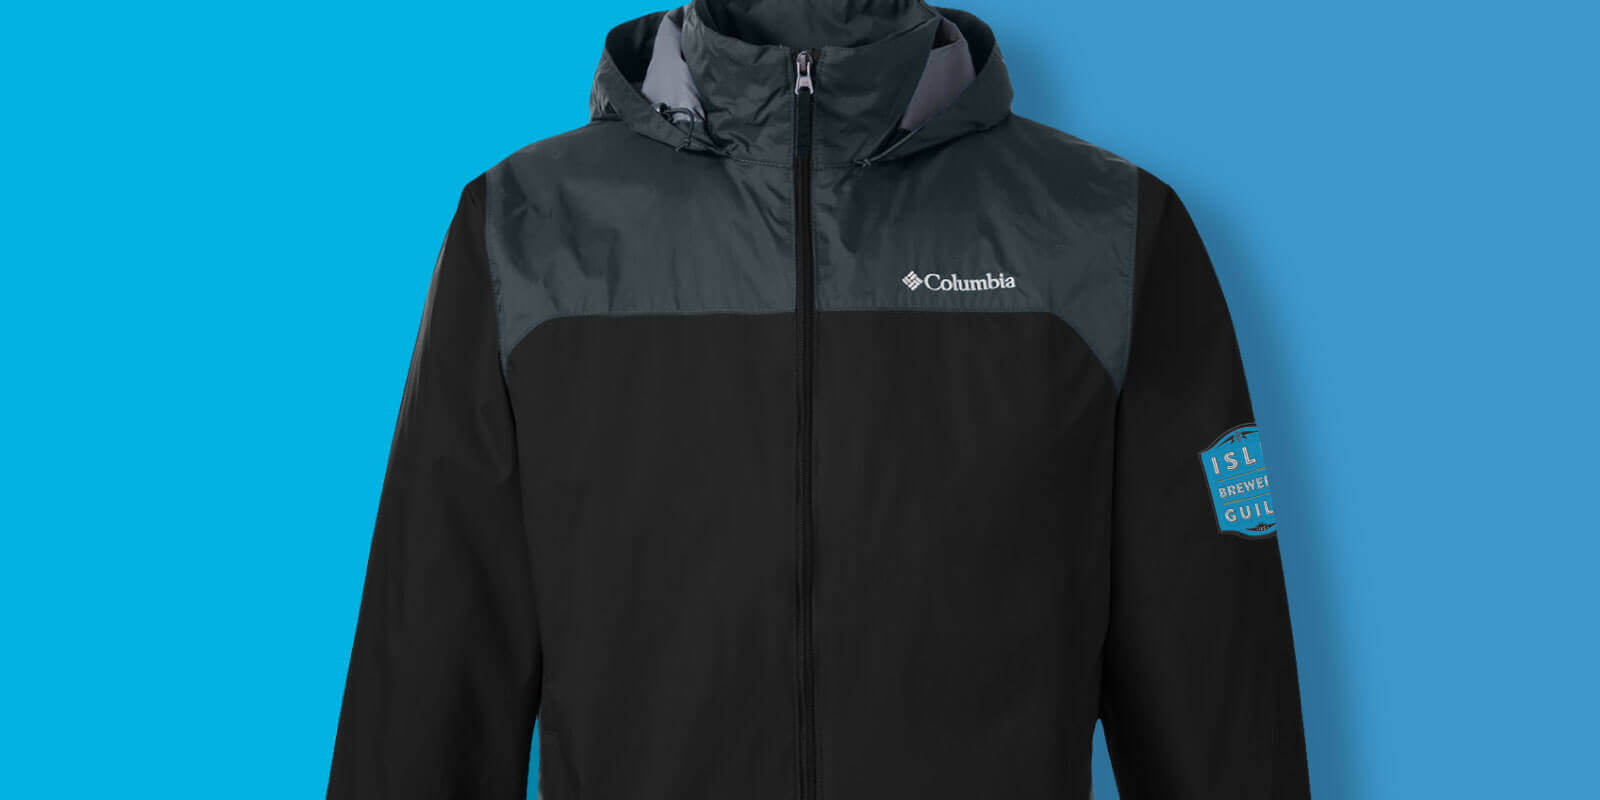 Columbia Custom Jackets and Company Merchandise – Corporate Gear